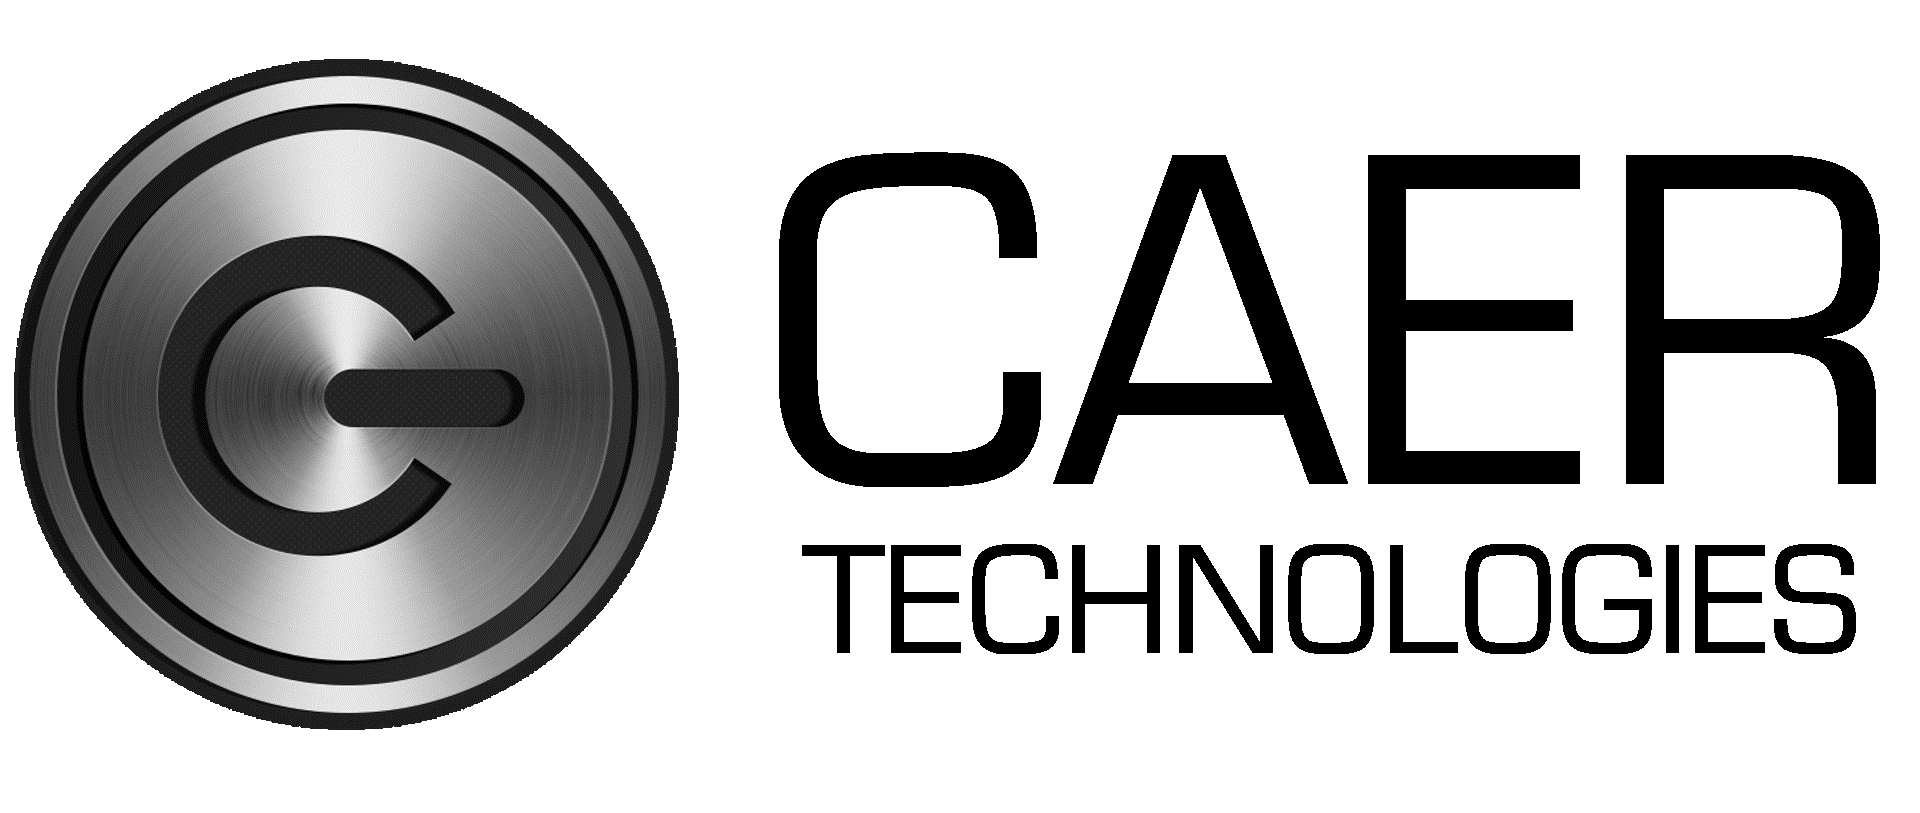 CAER Technologies